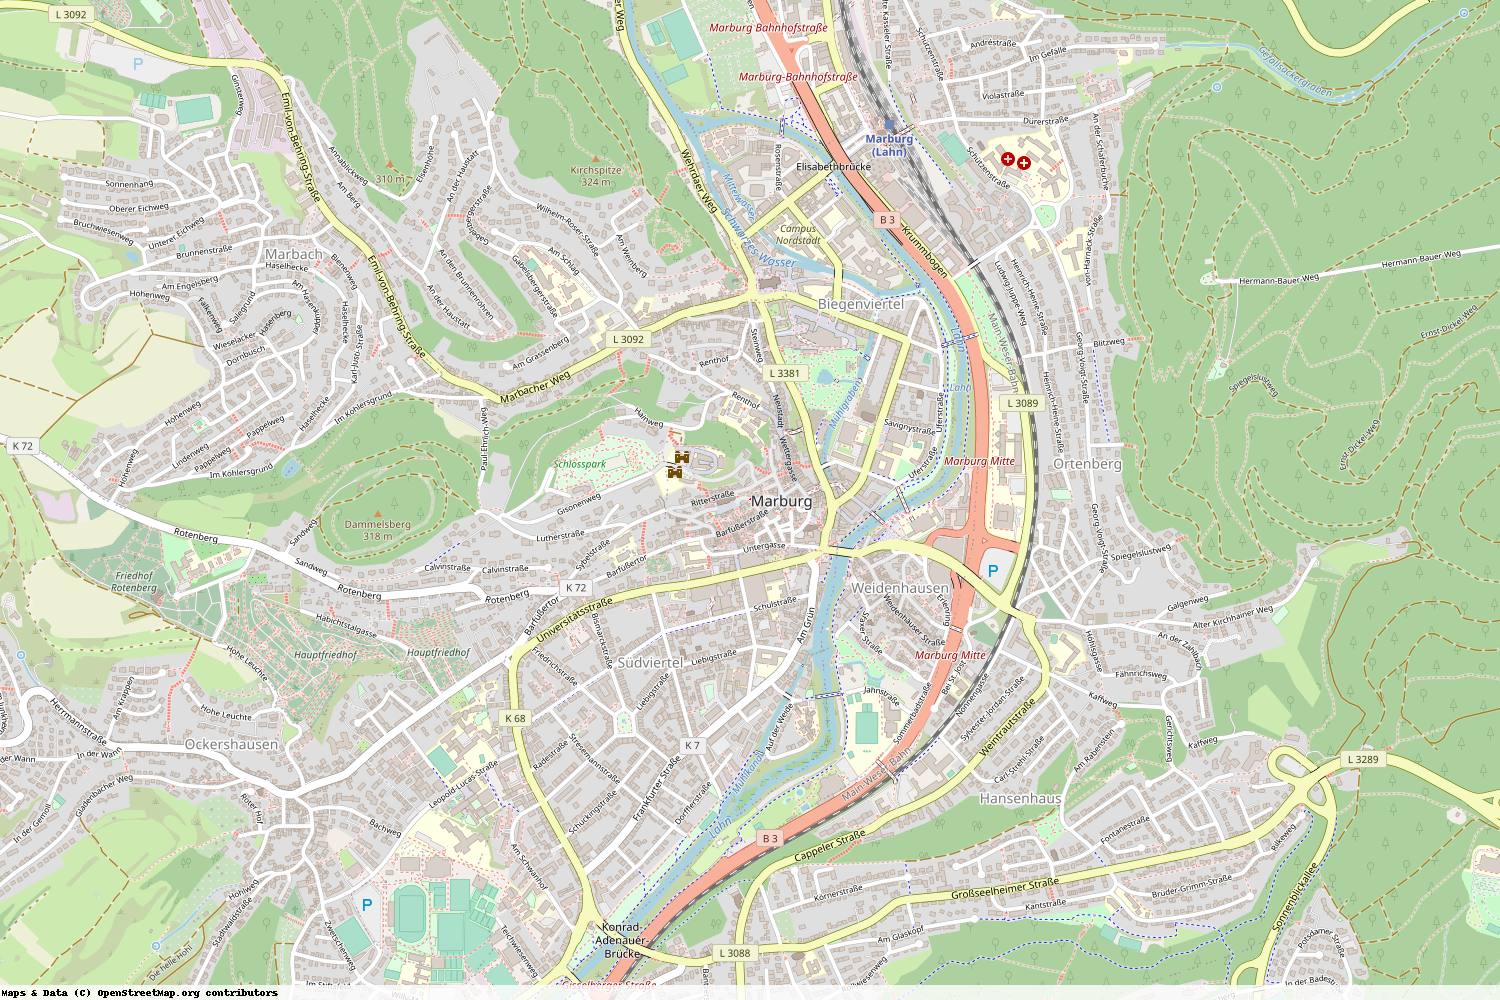 Ist gerade Stromausfall in Hessen - Marburg-Biedenkopf - Marburg?